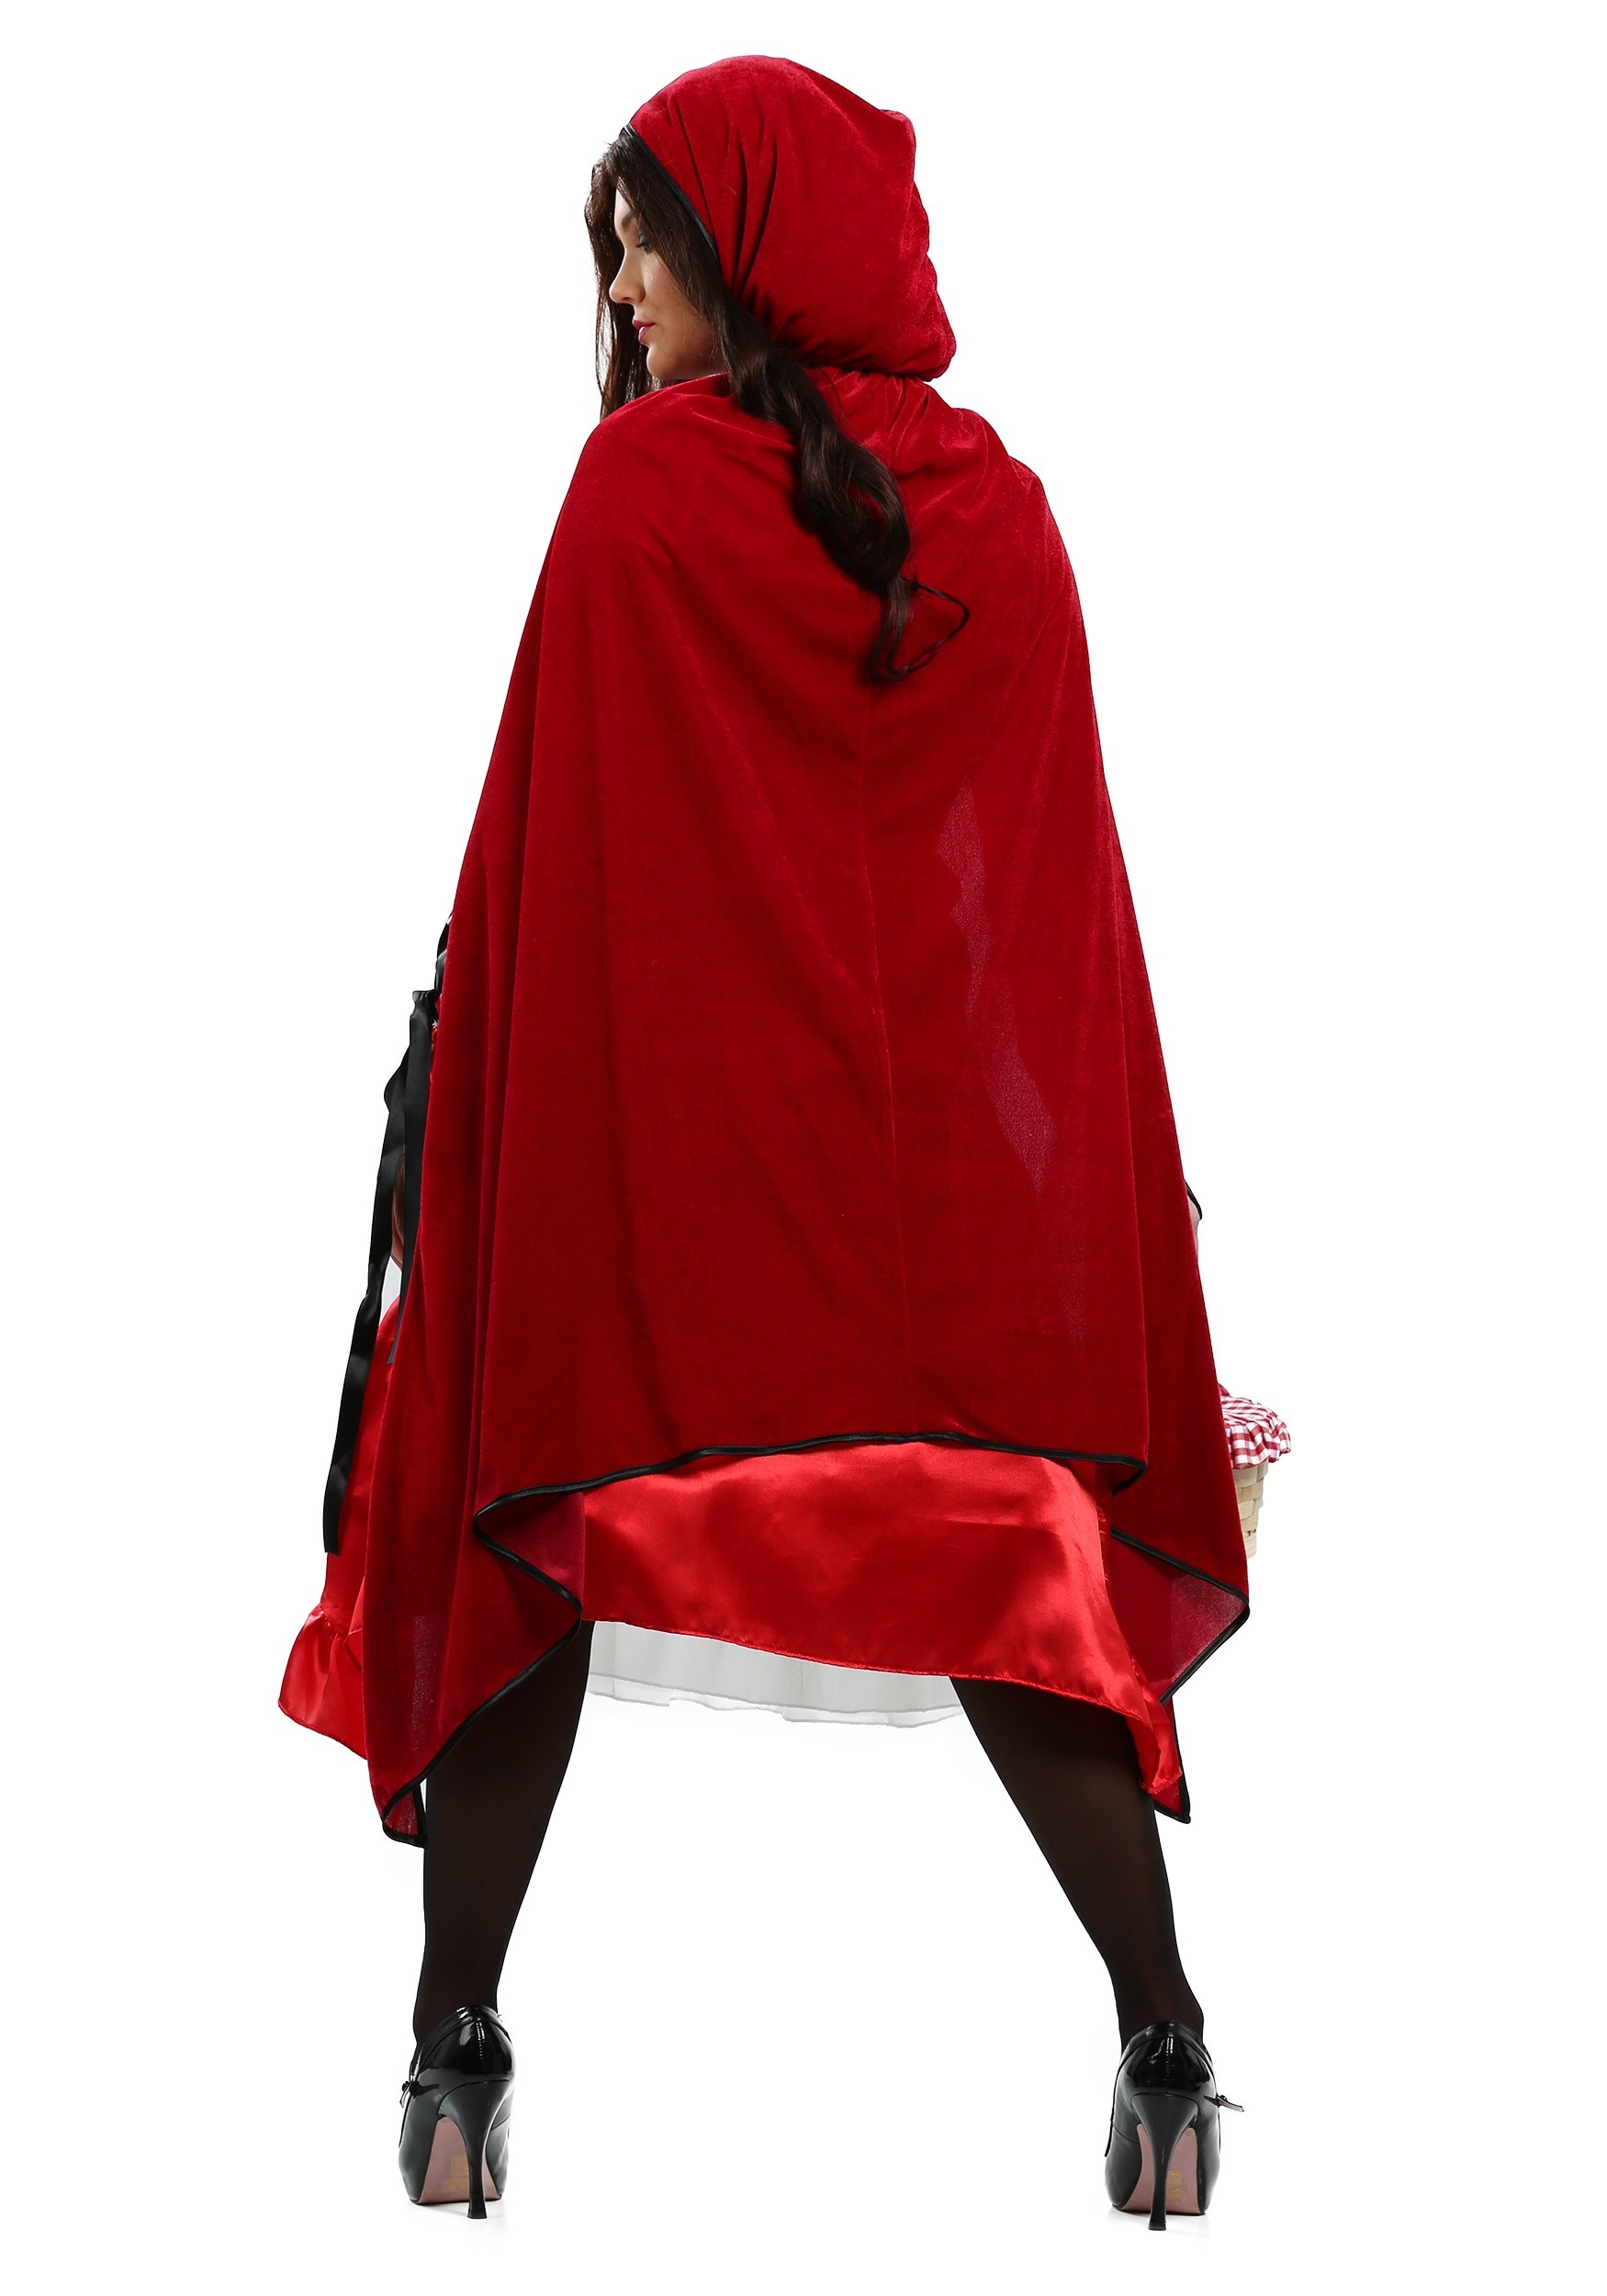 Womens Fairytale Red Riding Hood Fancy Dress Costume